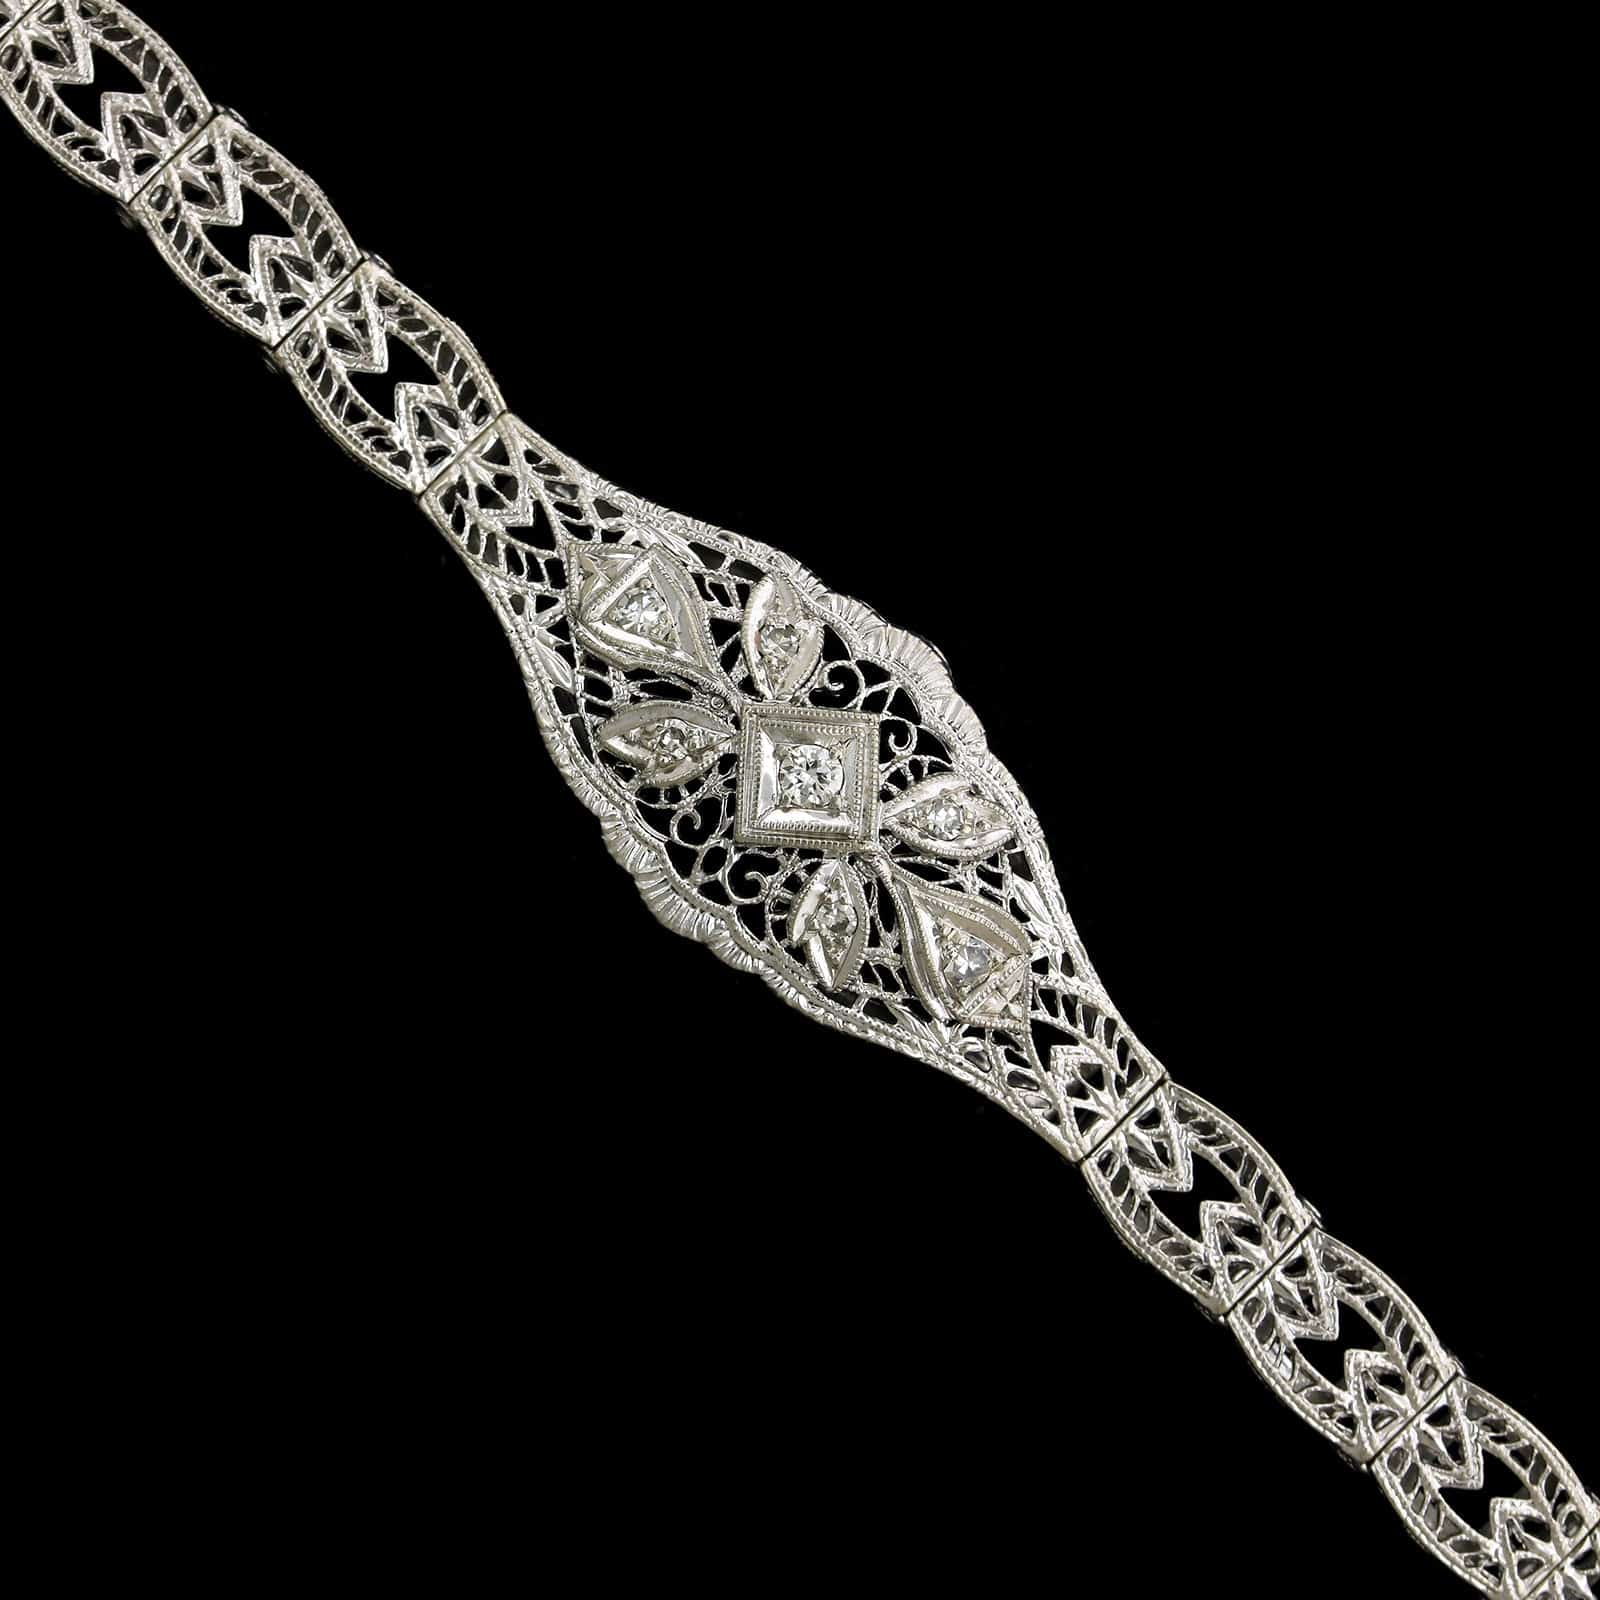 Vintage 14K White Gold Estate Filigree Diamond Bracelet